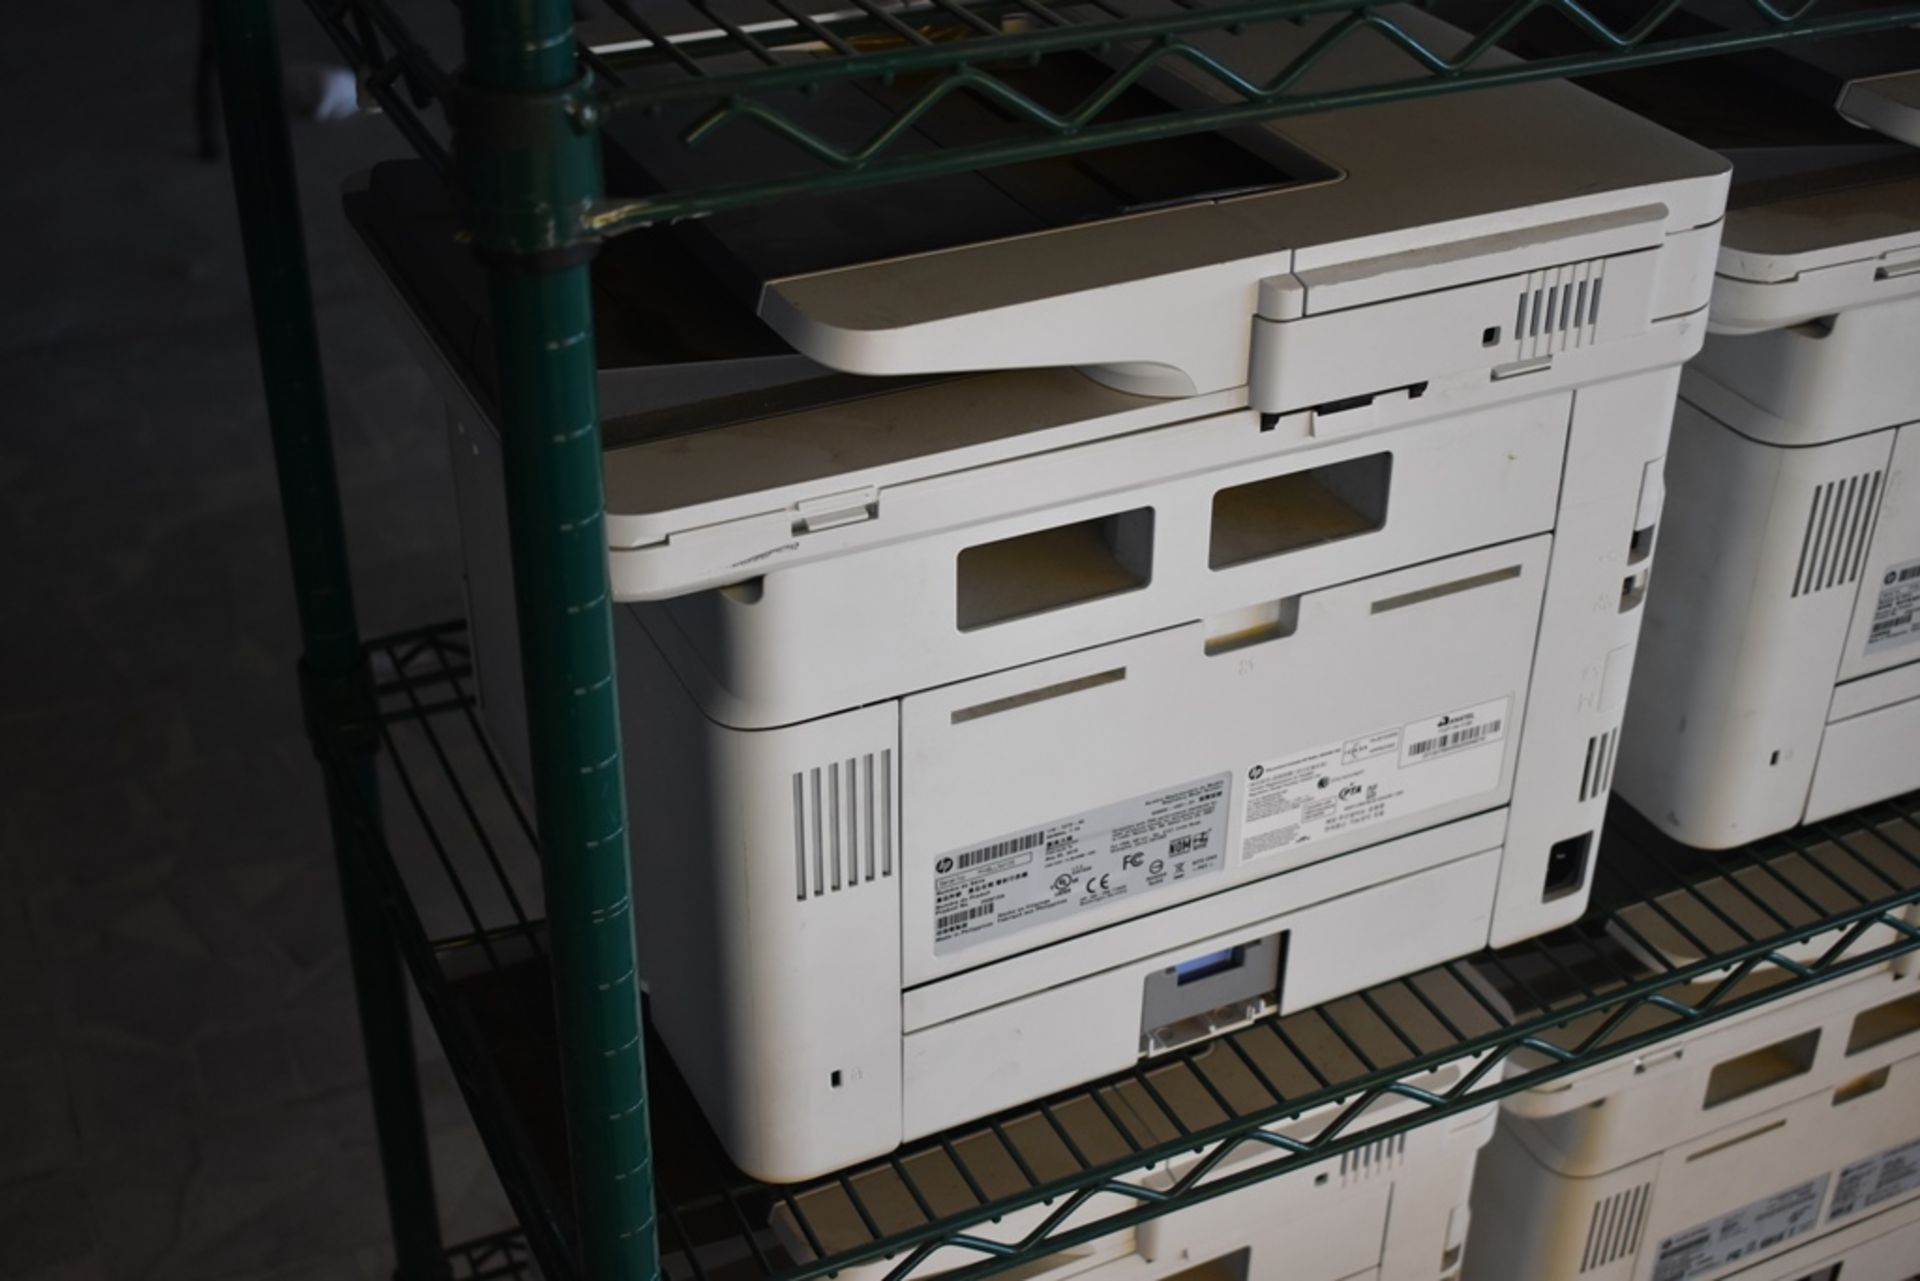 3 impresoras multifuncional marca HP, Modelo: LaserJet Pro MFP M426fdw - Image 20 of 21